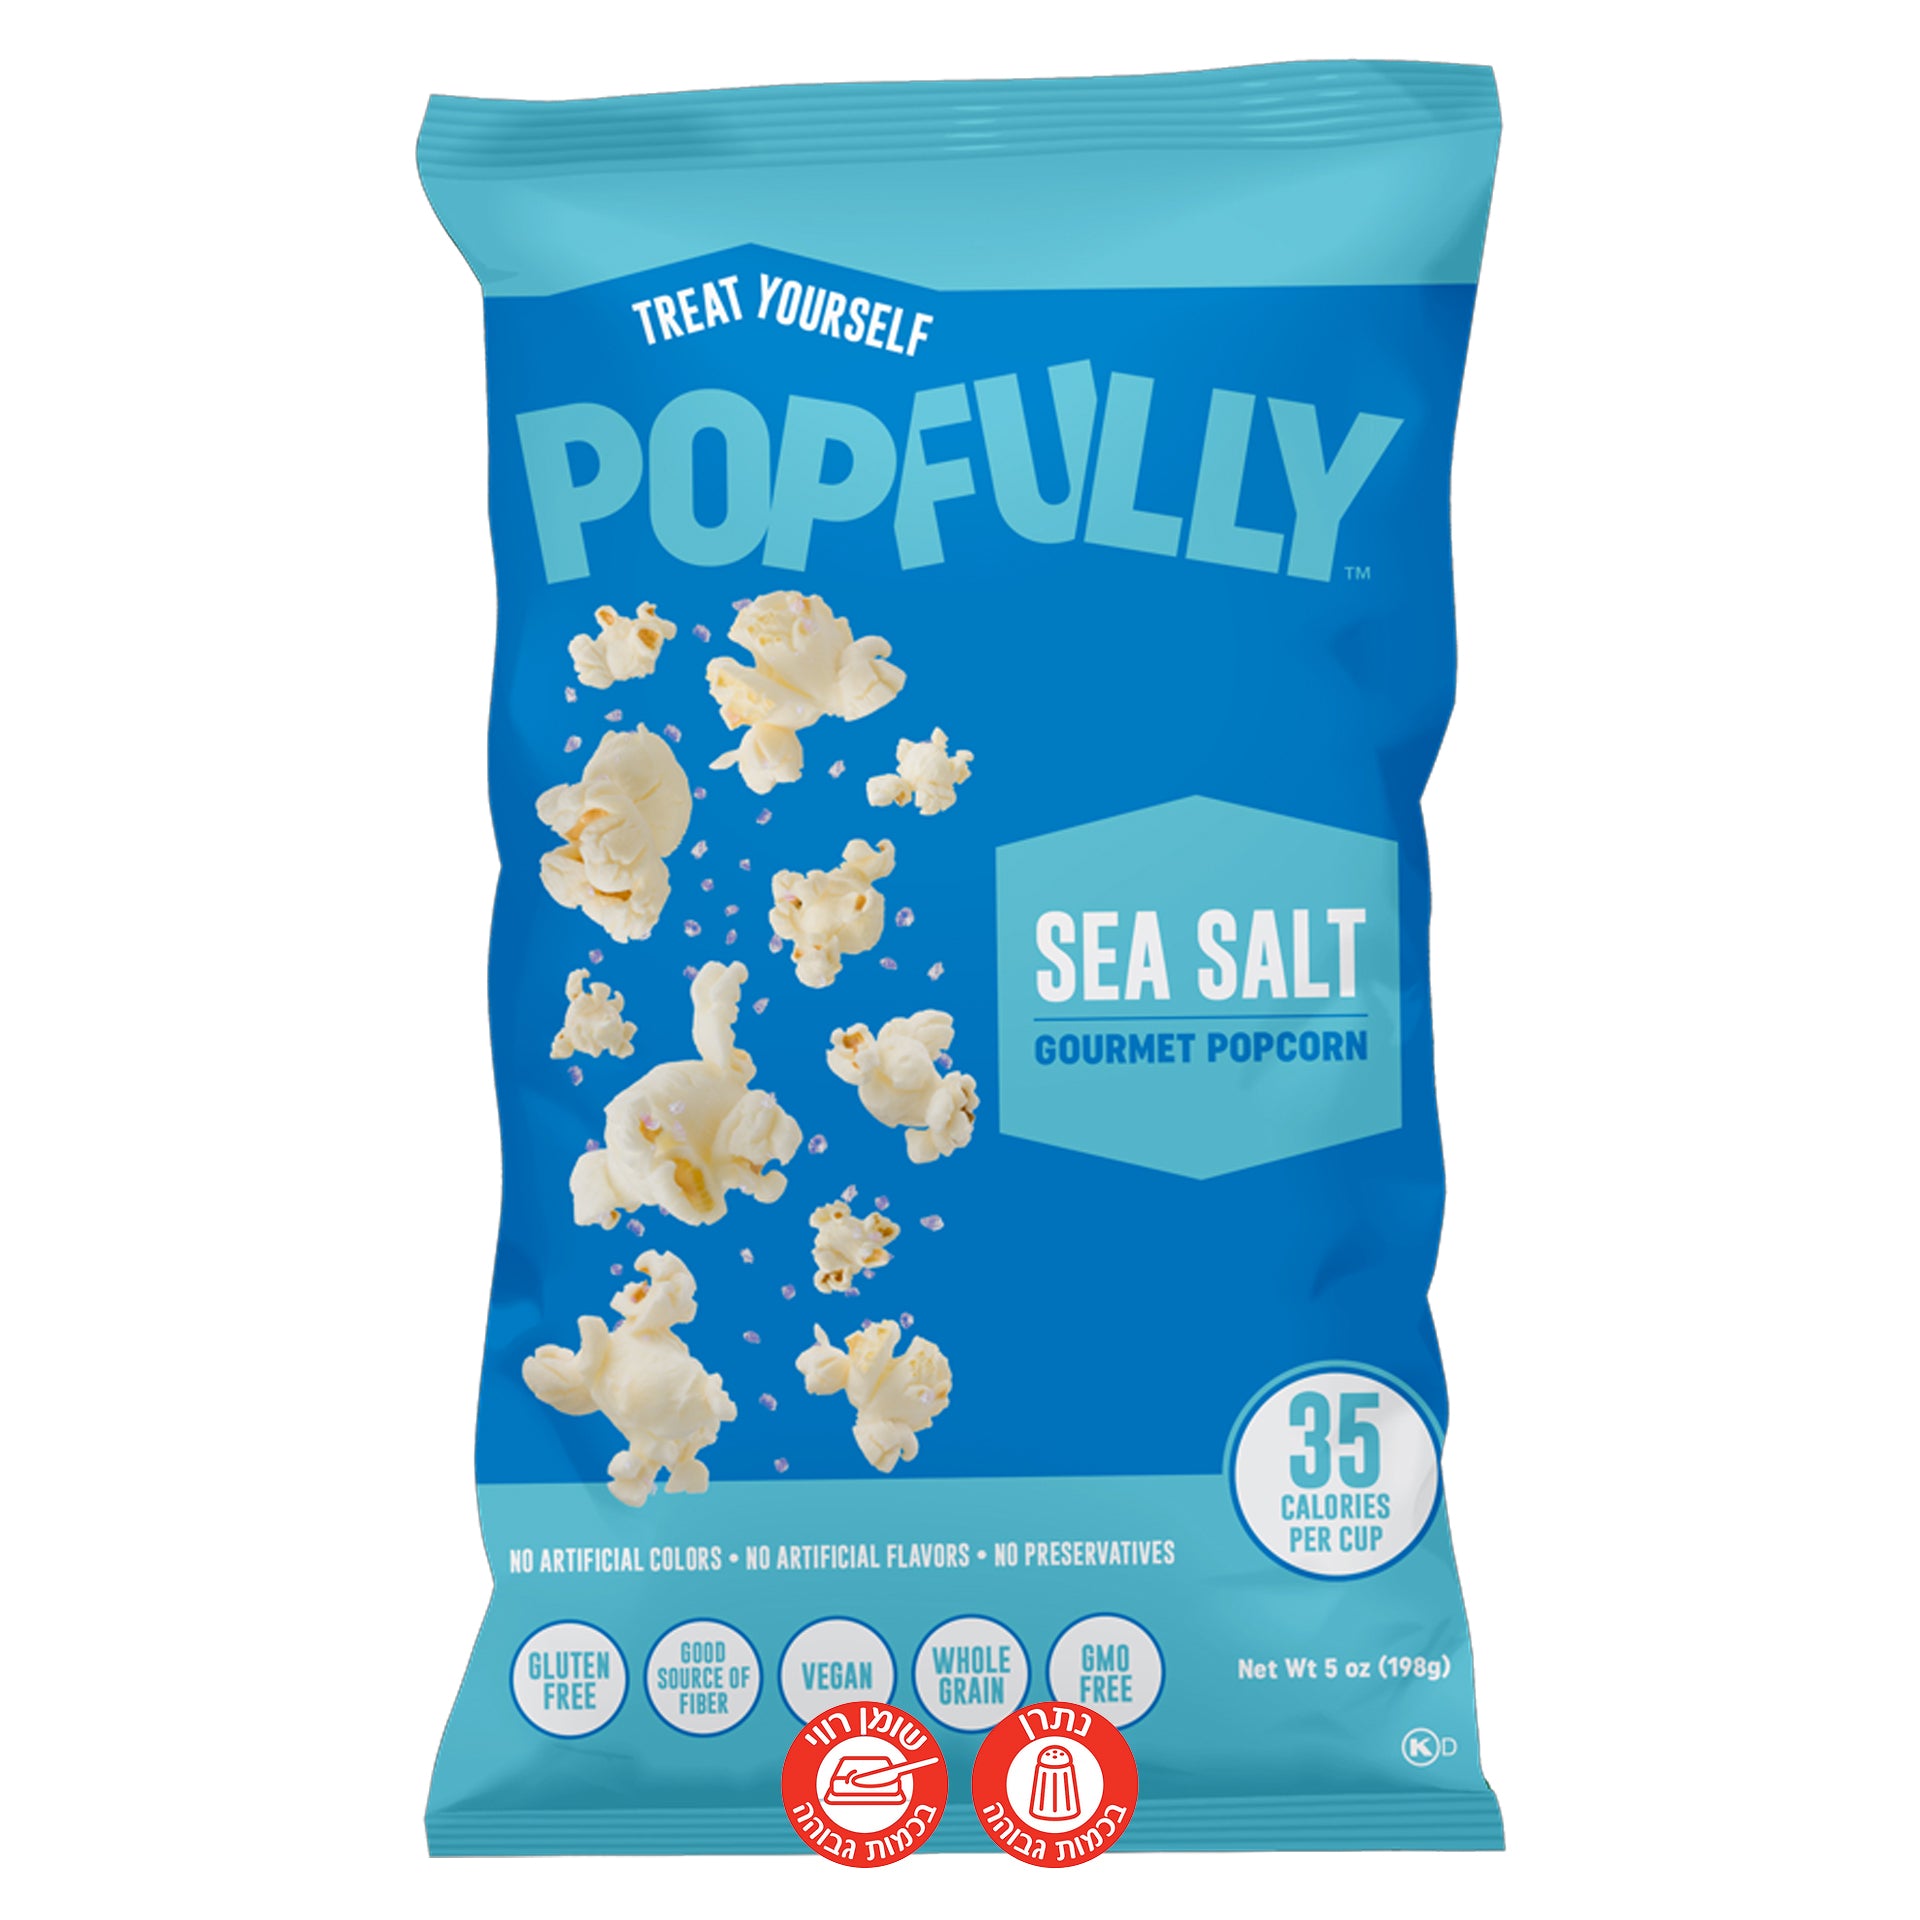 Popfully Hot Sea Salt פופולי פופקורן גורמה מוכן לאכילה בטעם מלח ים